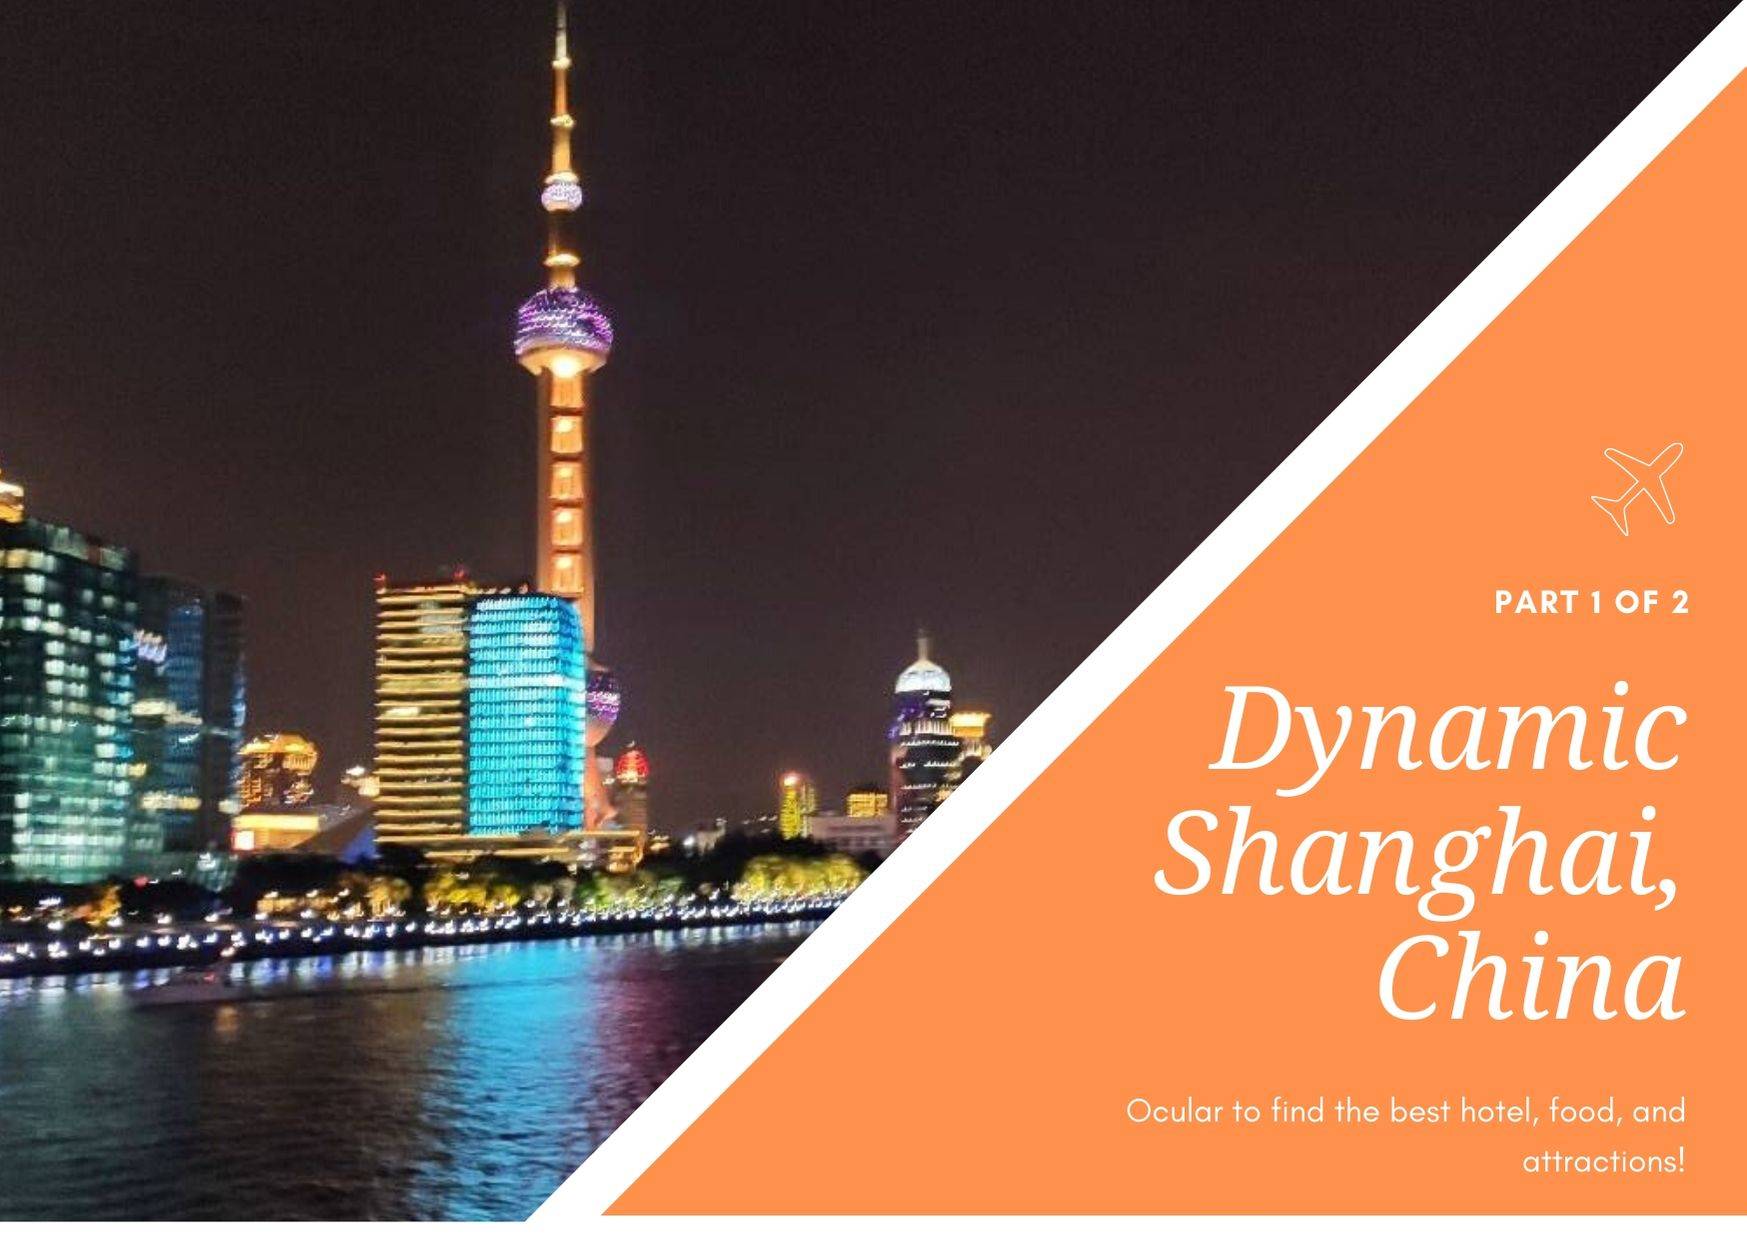 Let's explore the modern city of Shanghai | PART 1